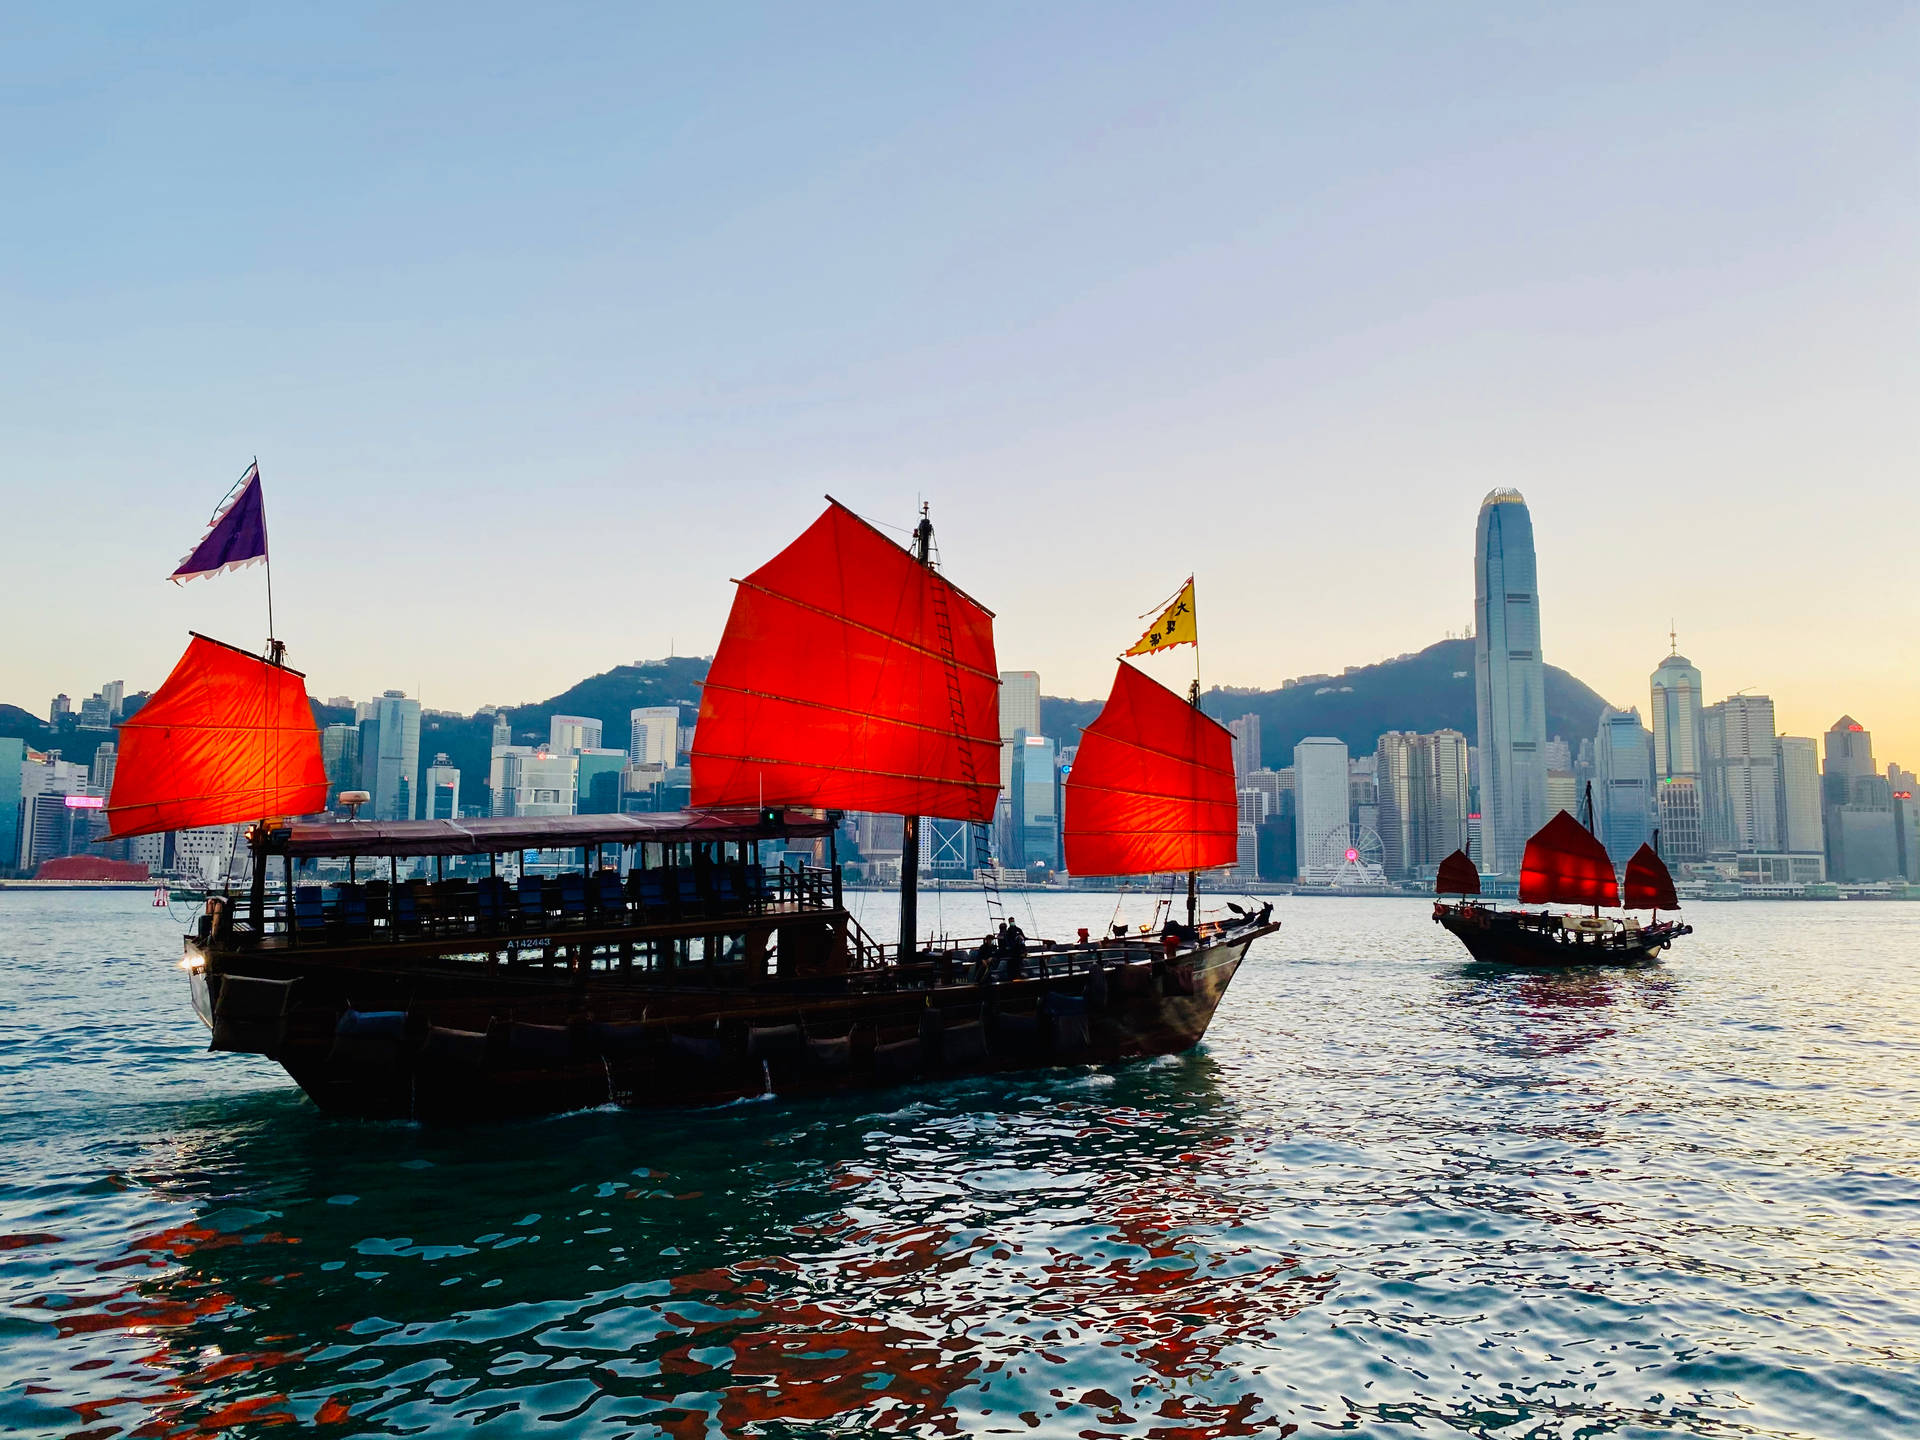 Hong Kong Dukling Harbor Cruise Background